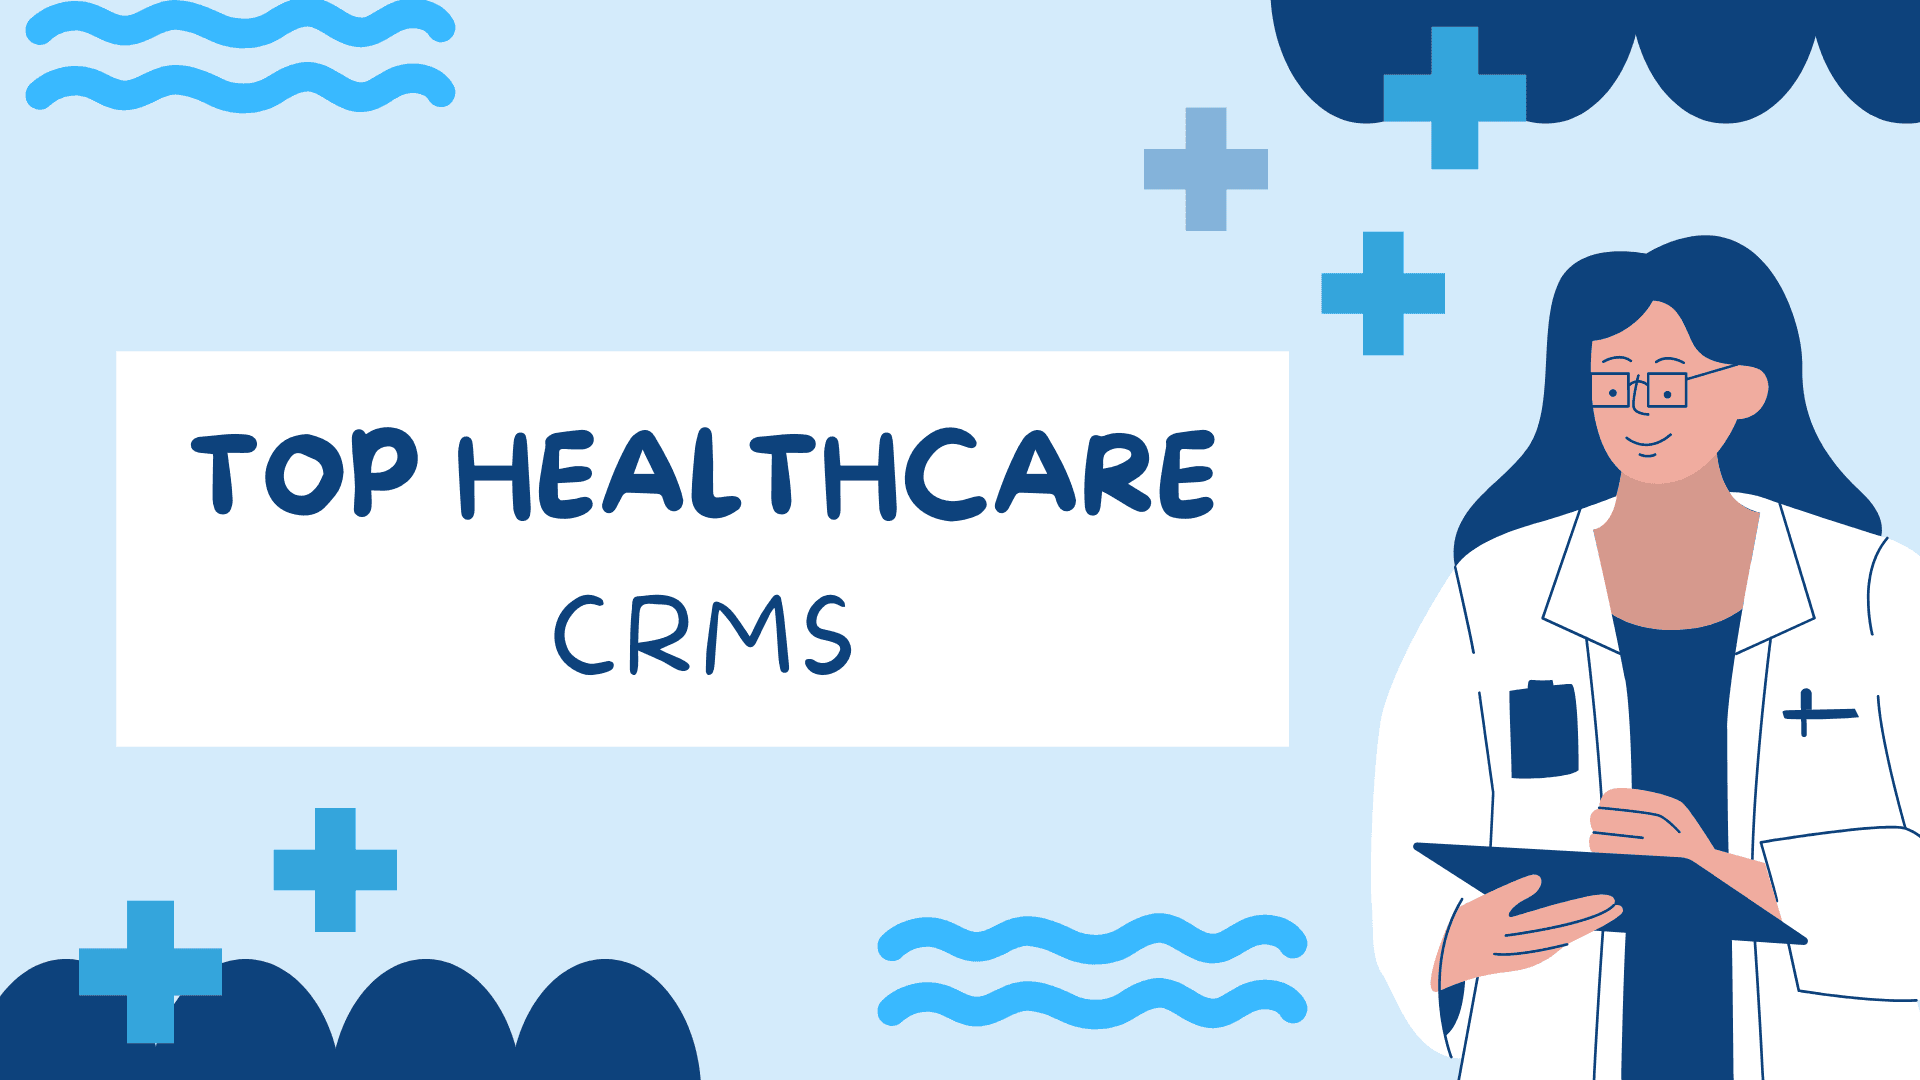 Top 5 Healthcare CRMs  image